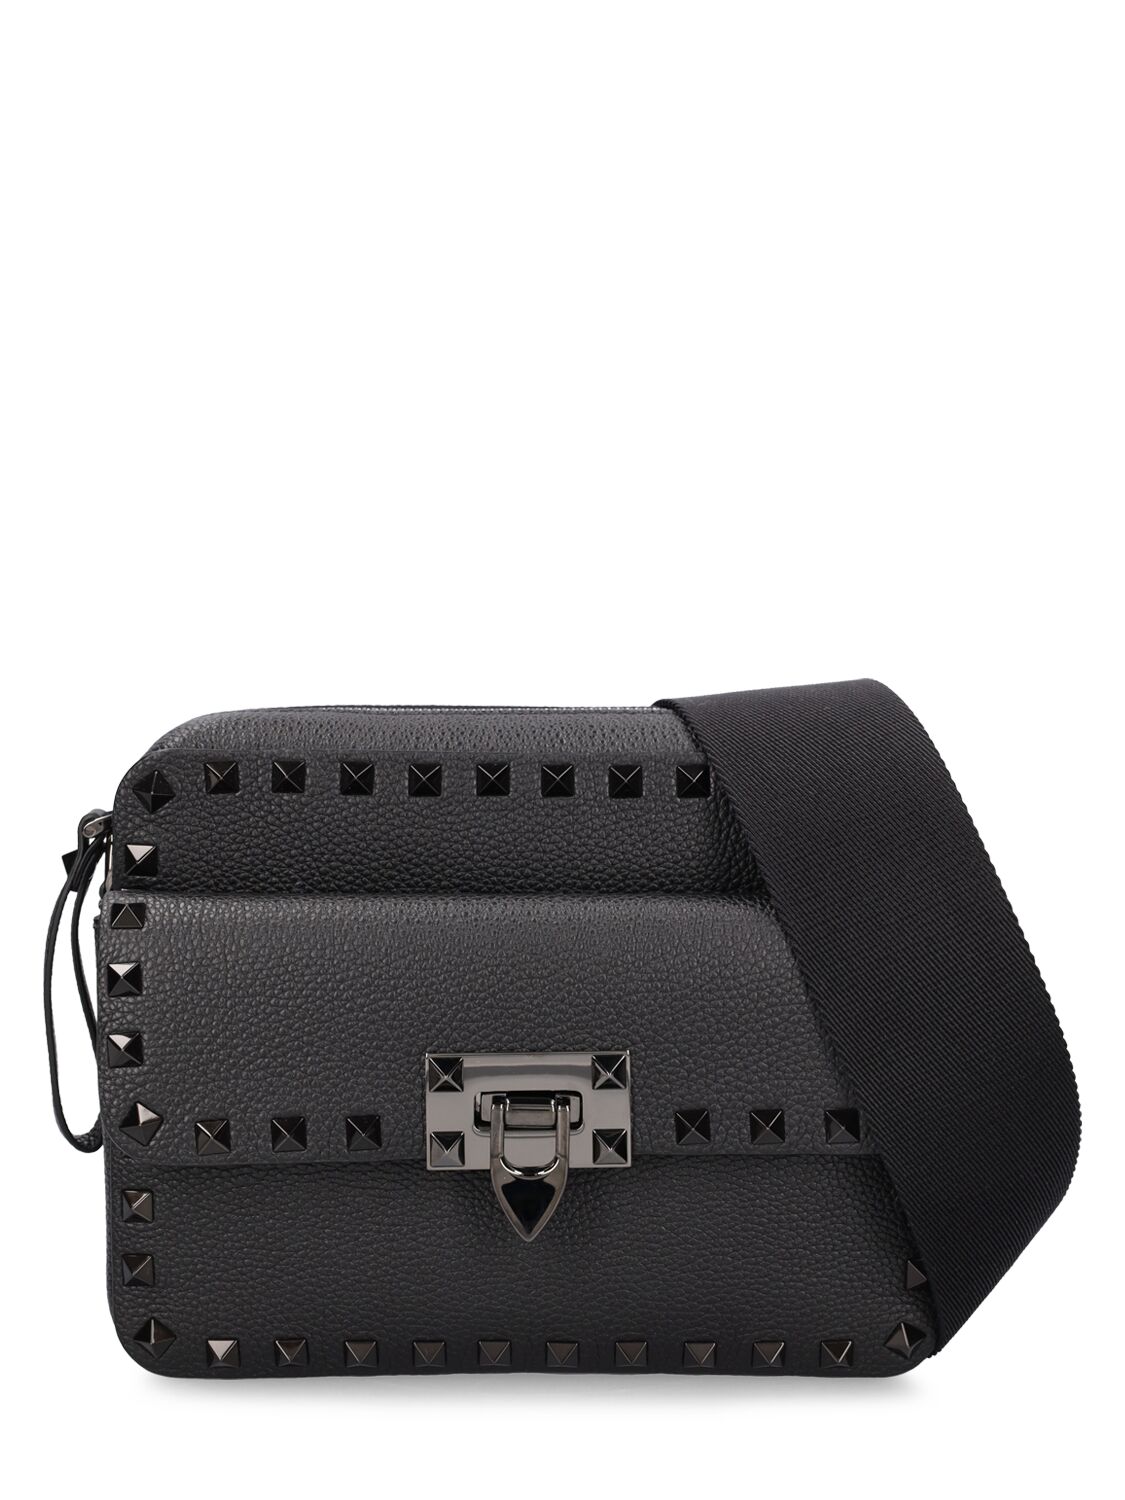 Valentino Garavani Rockstud Grained Leather Crossbody Bag In Black